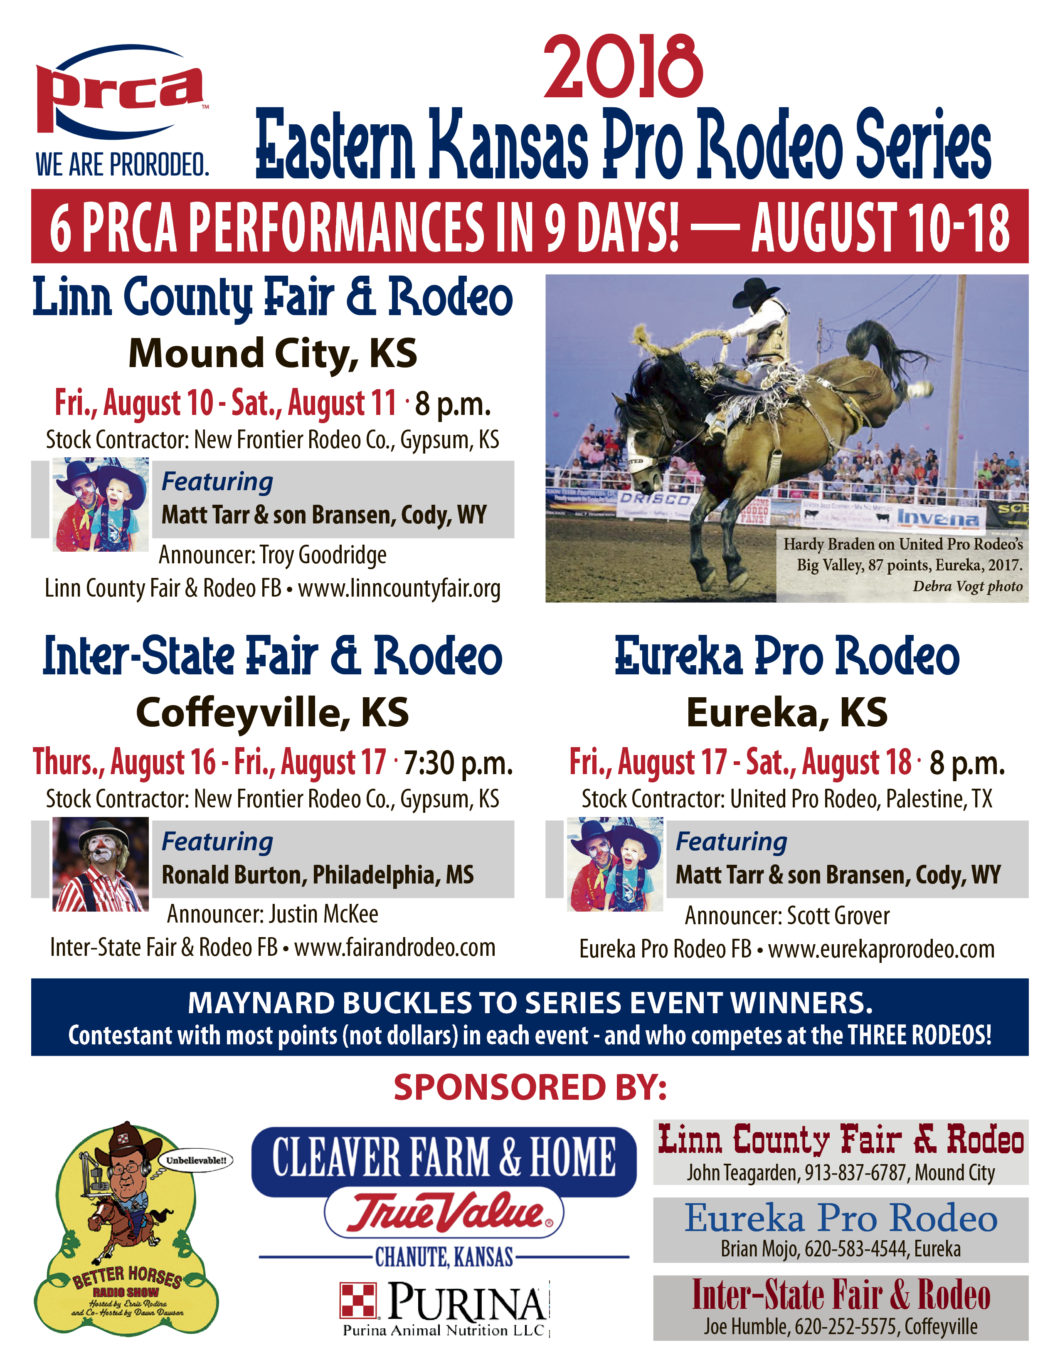 Linn County Fair & Rodeo Eastern Kansas Pro Rodeo Series Better Horses